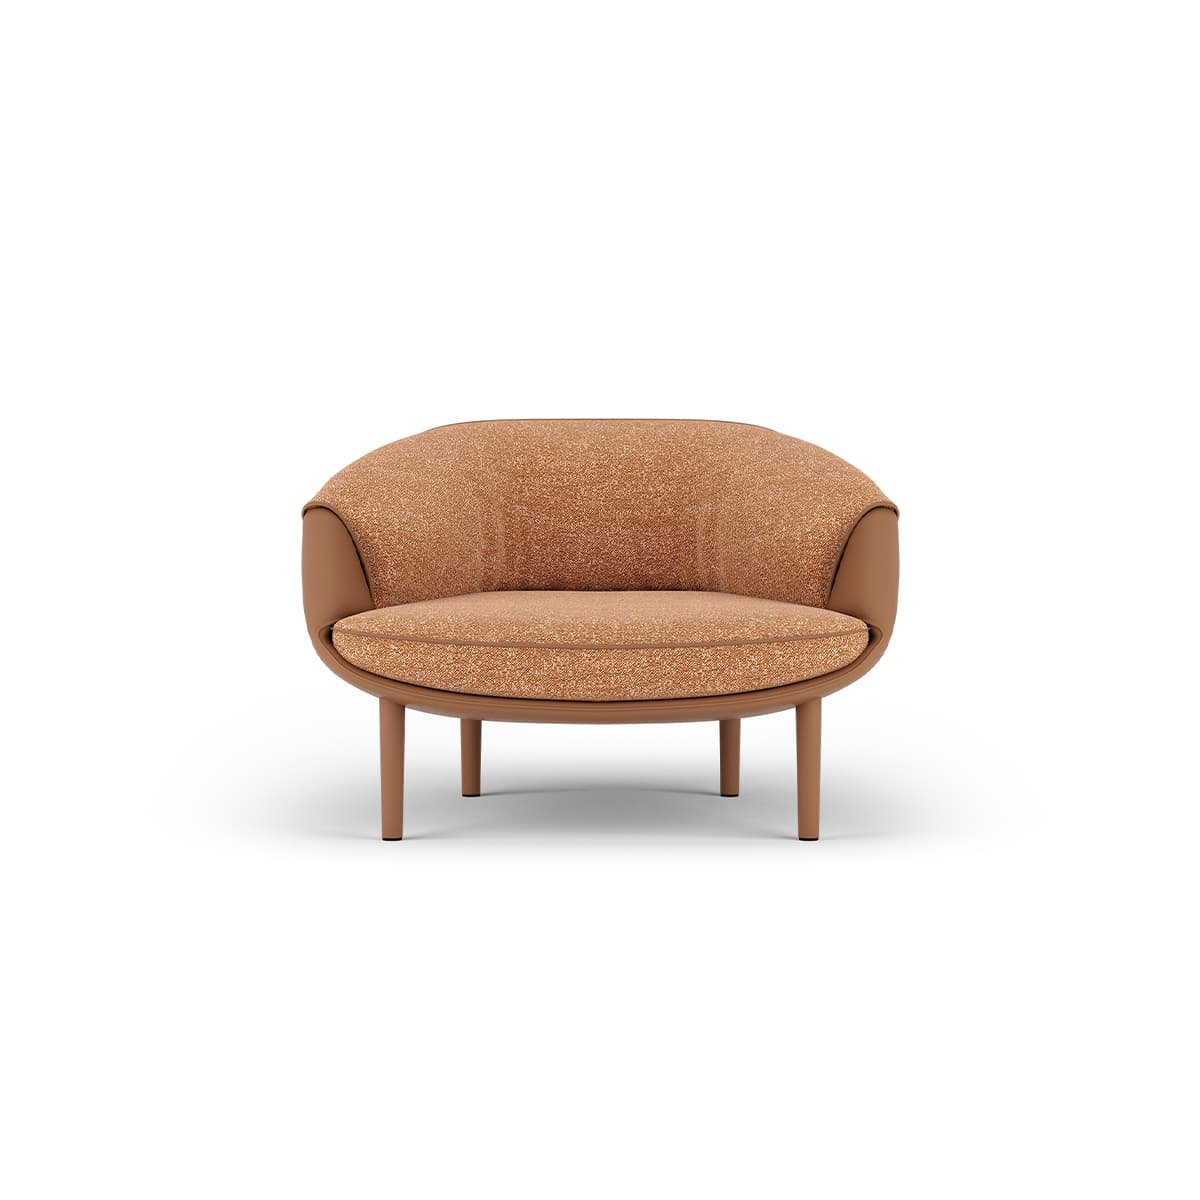 Chair Design Image